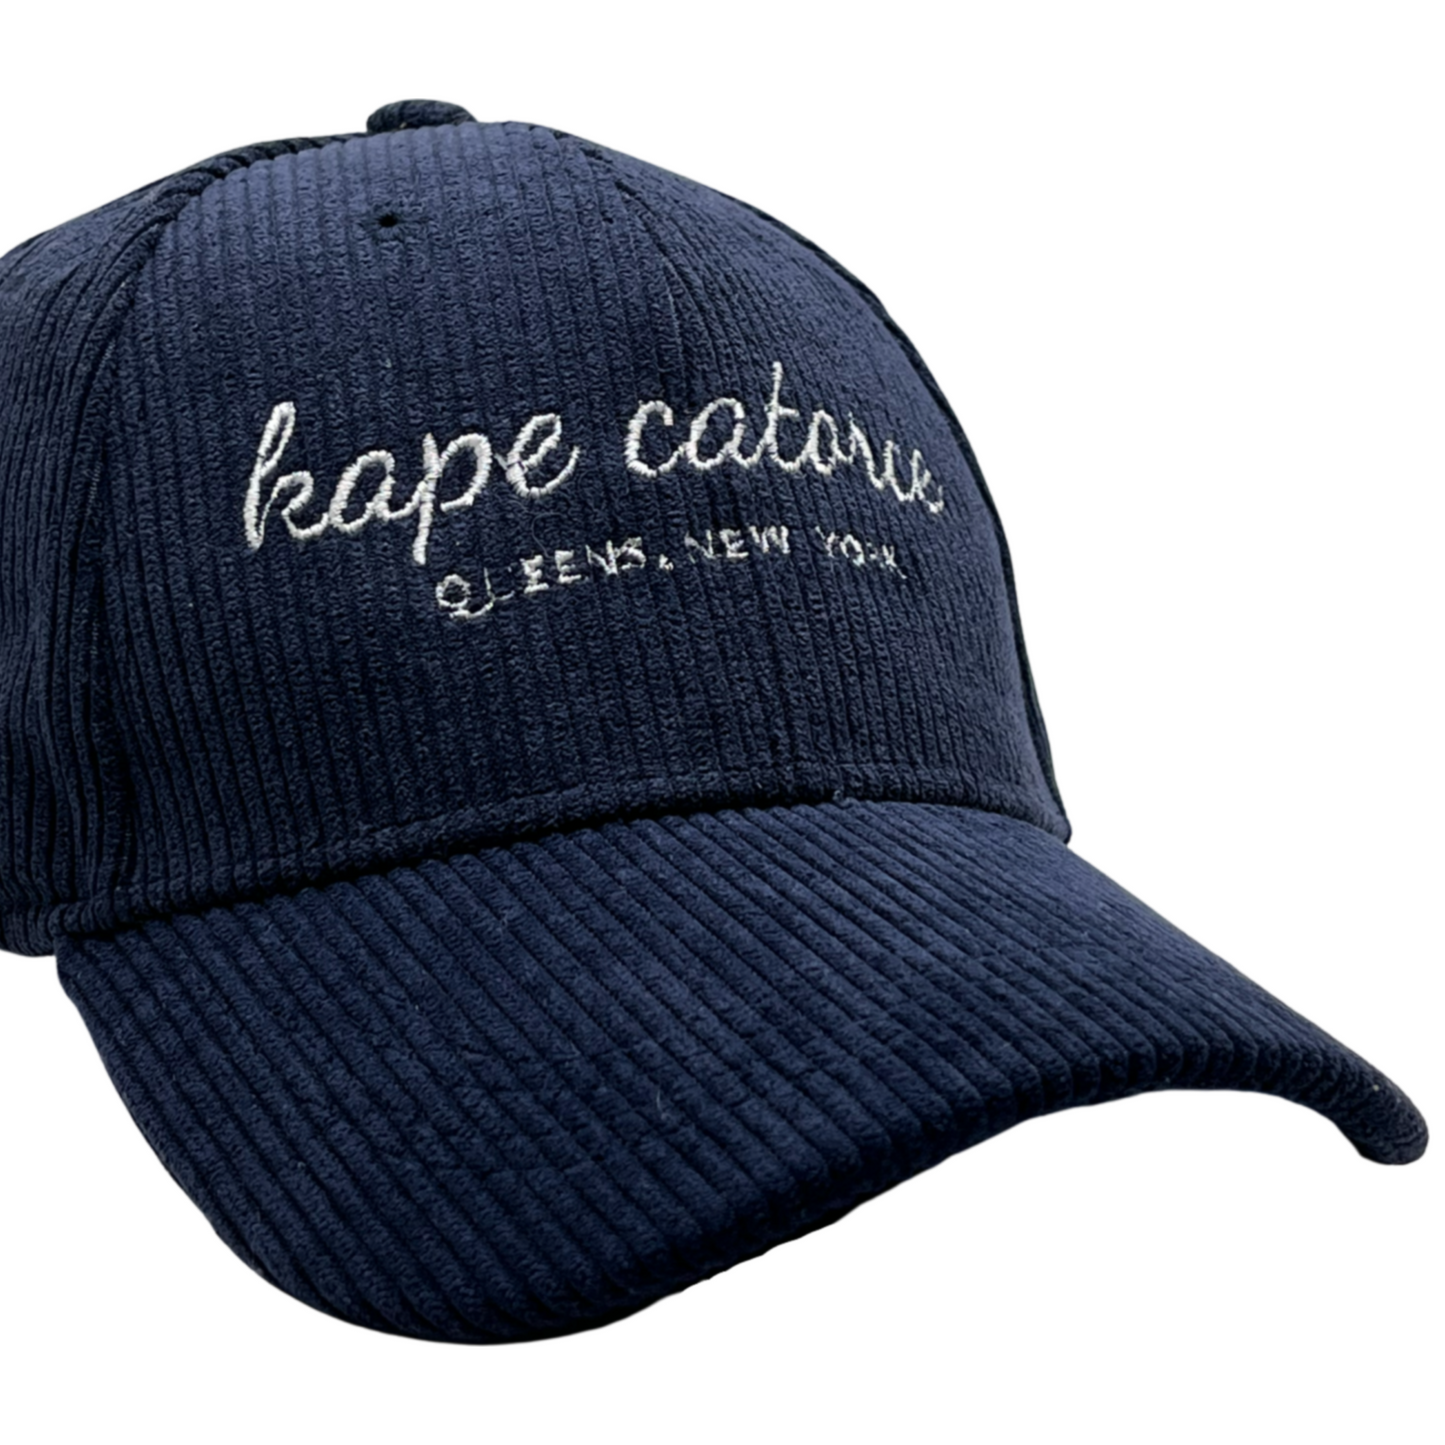 Kape Catorce Corduroy Hat